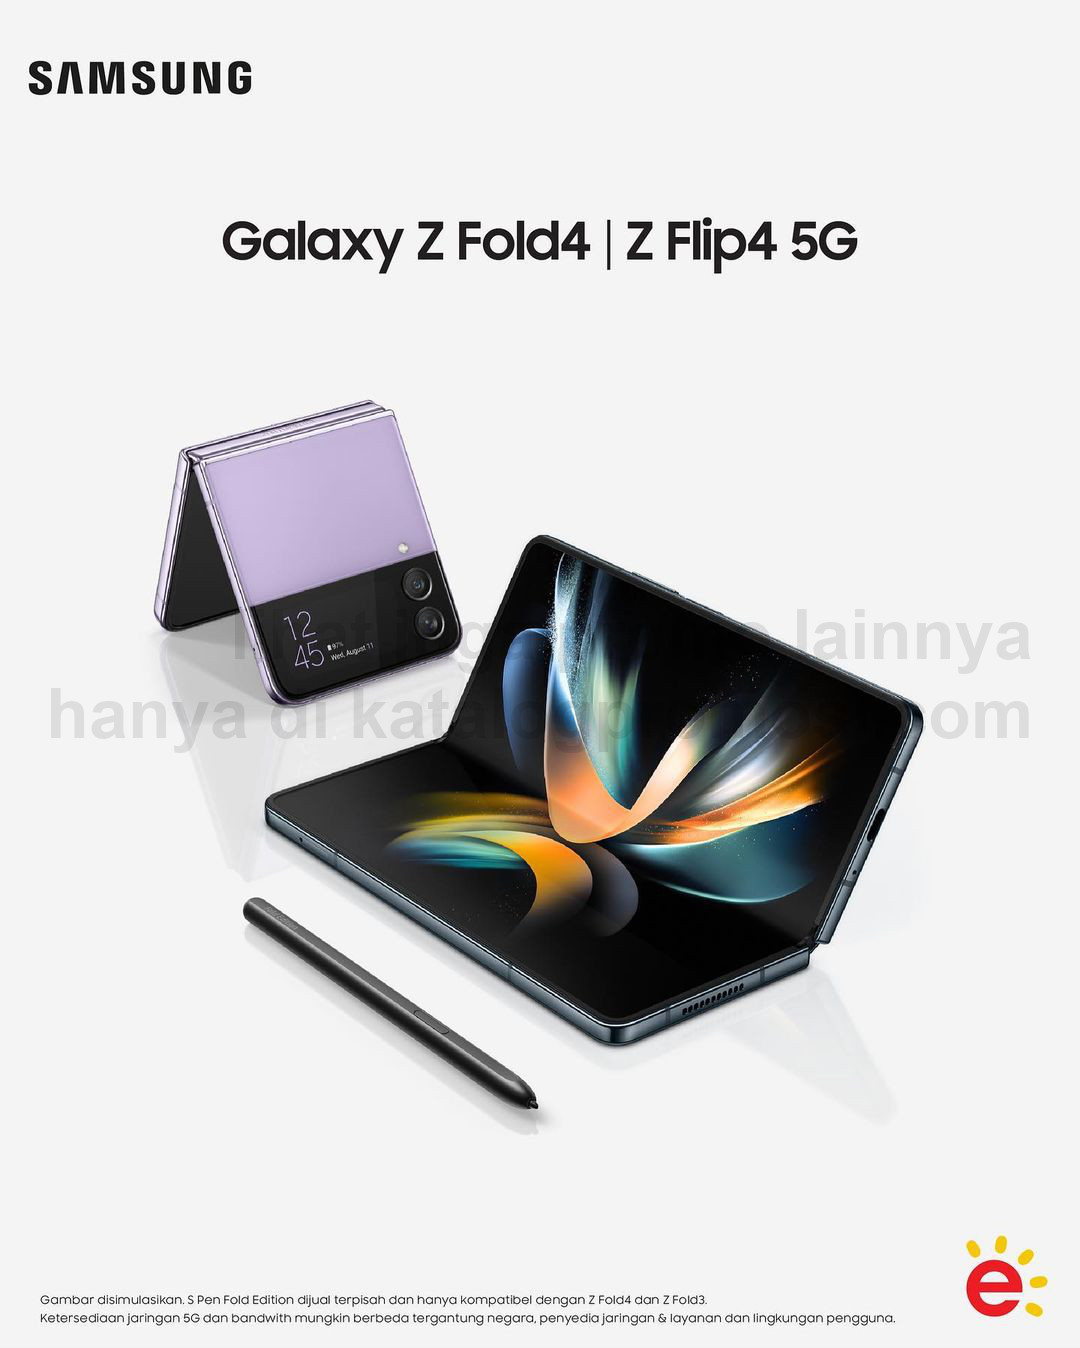 PROMO ERAFONE PRE-ORDER NOW Galaxy Z Fold4 | Flip4 5G! Nikmati penawaran terbaik senilai hingga Rp 6.239.000*